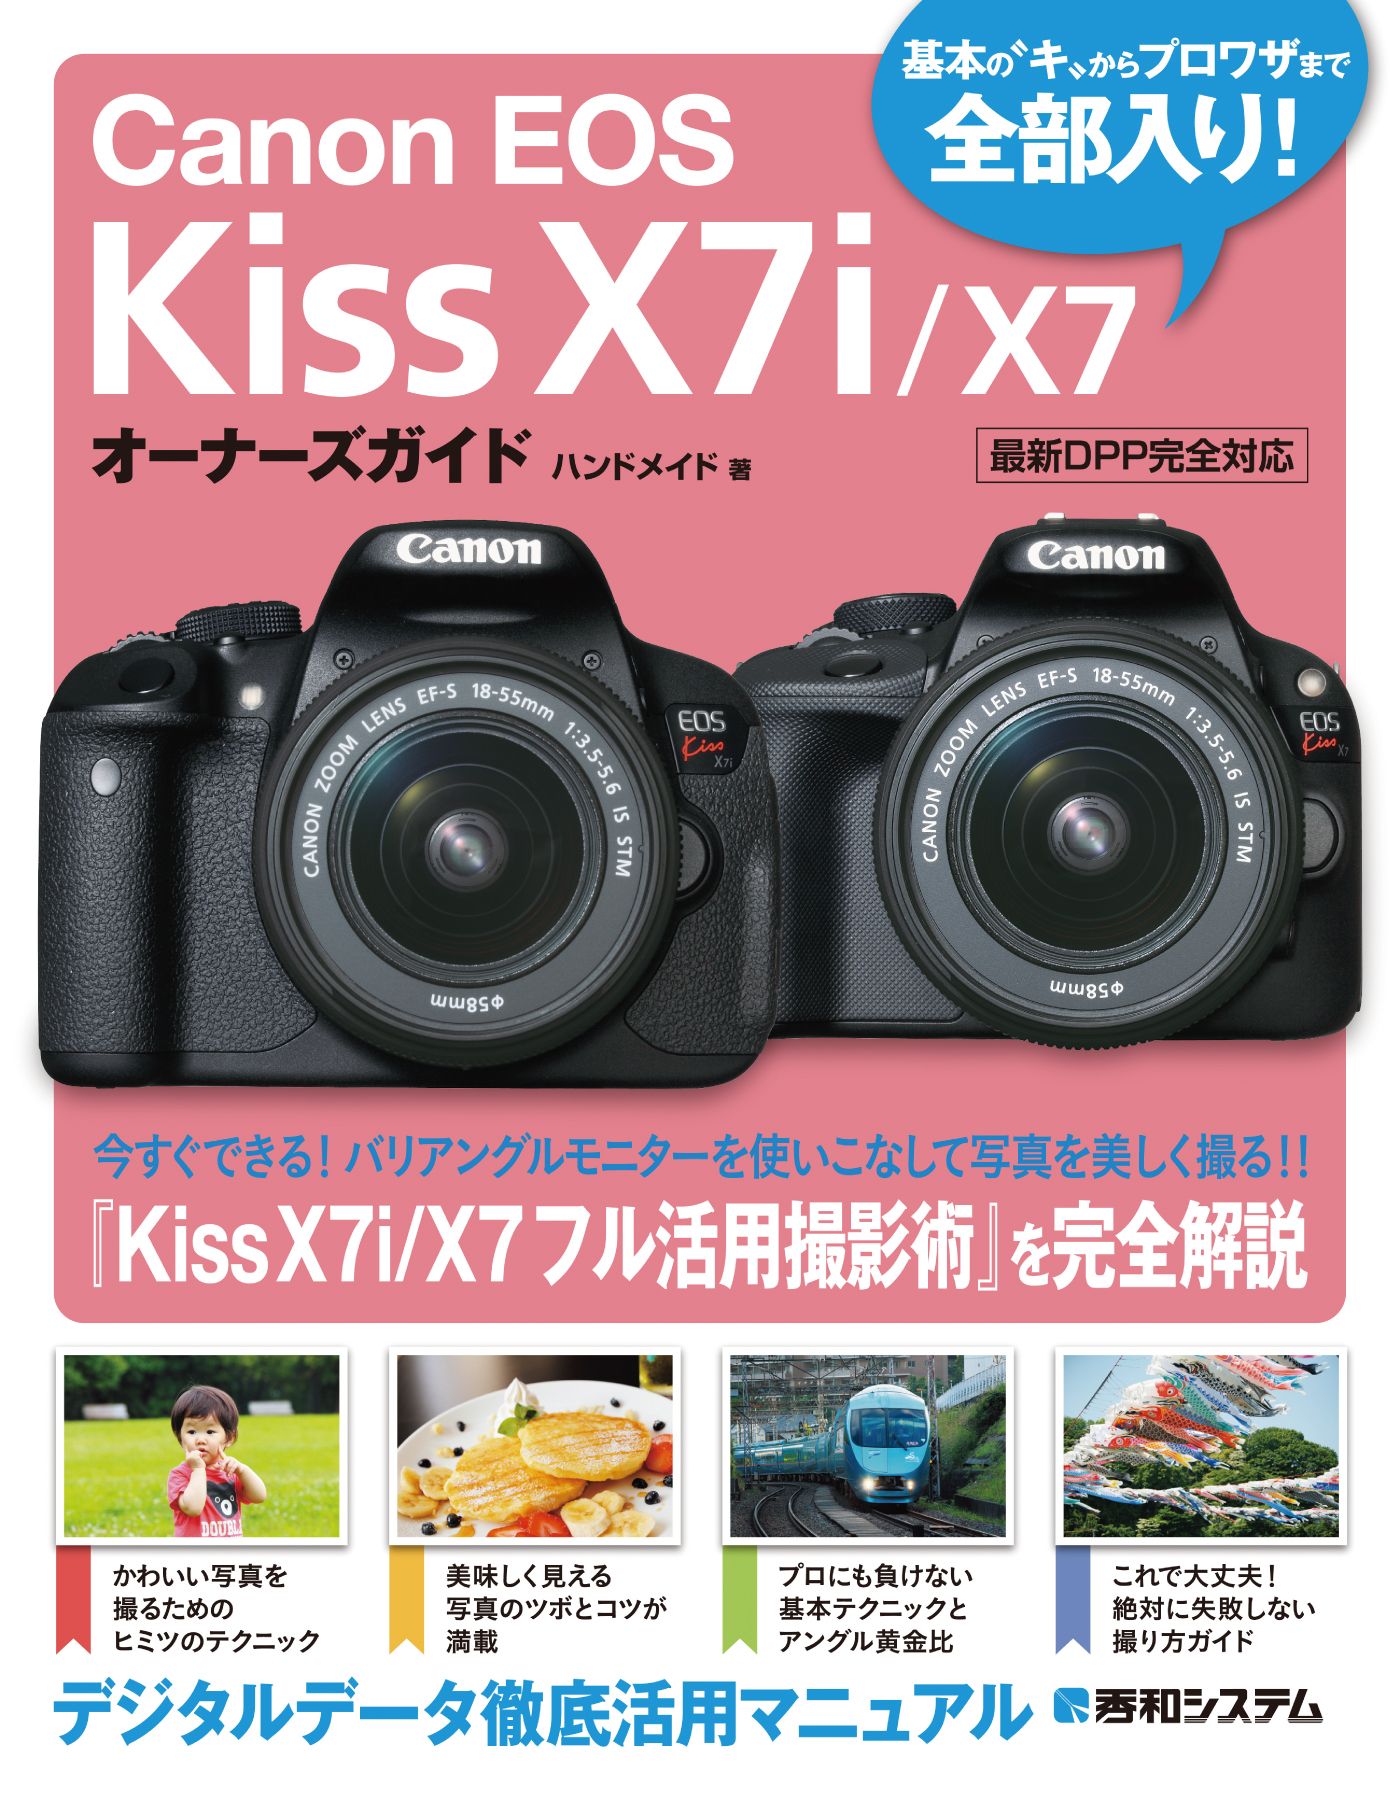 Canon EOSKissX7i